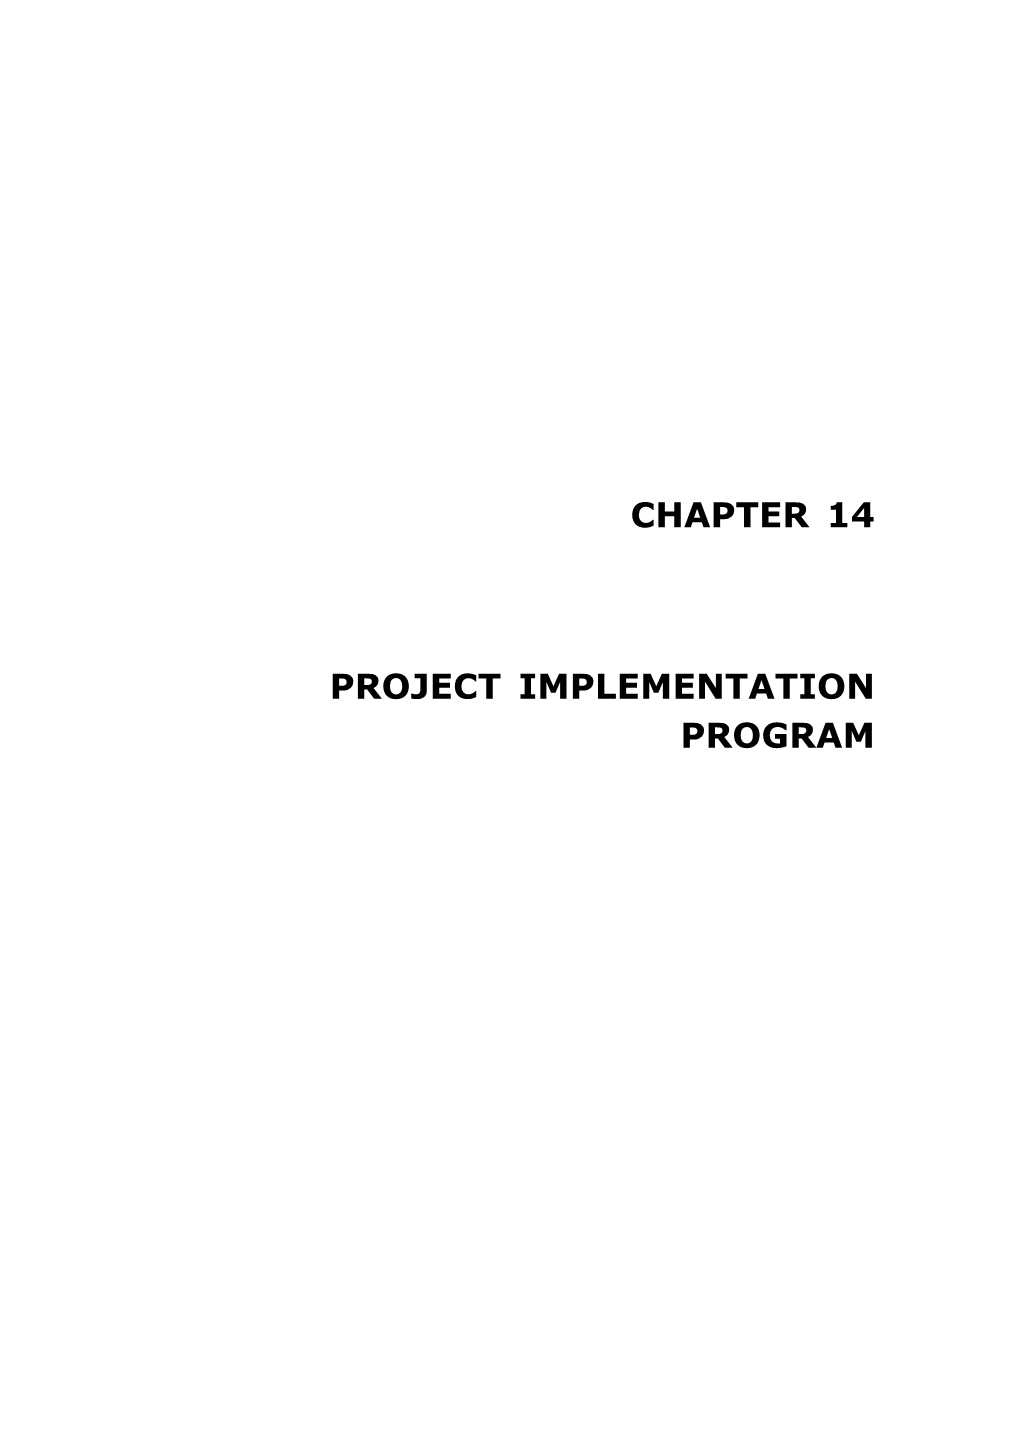 Chapter 14 Project Implementation Program